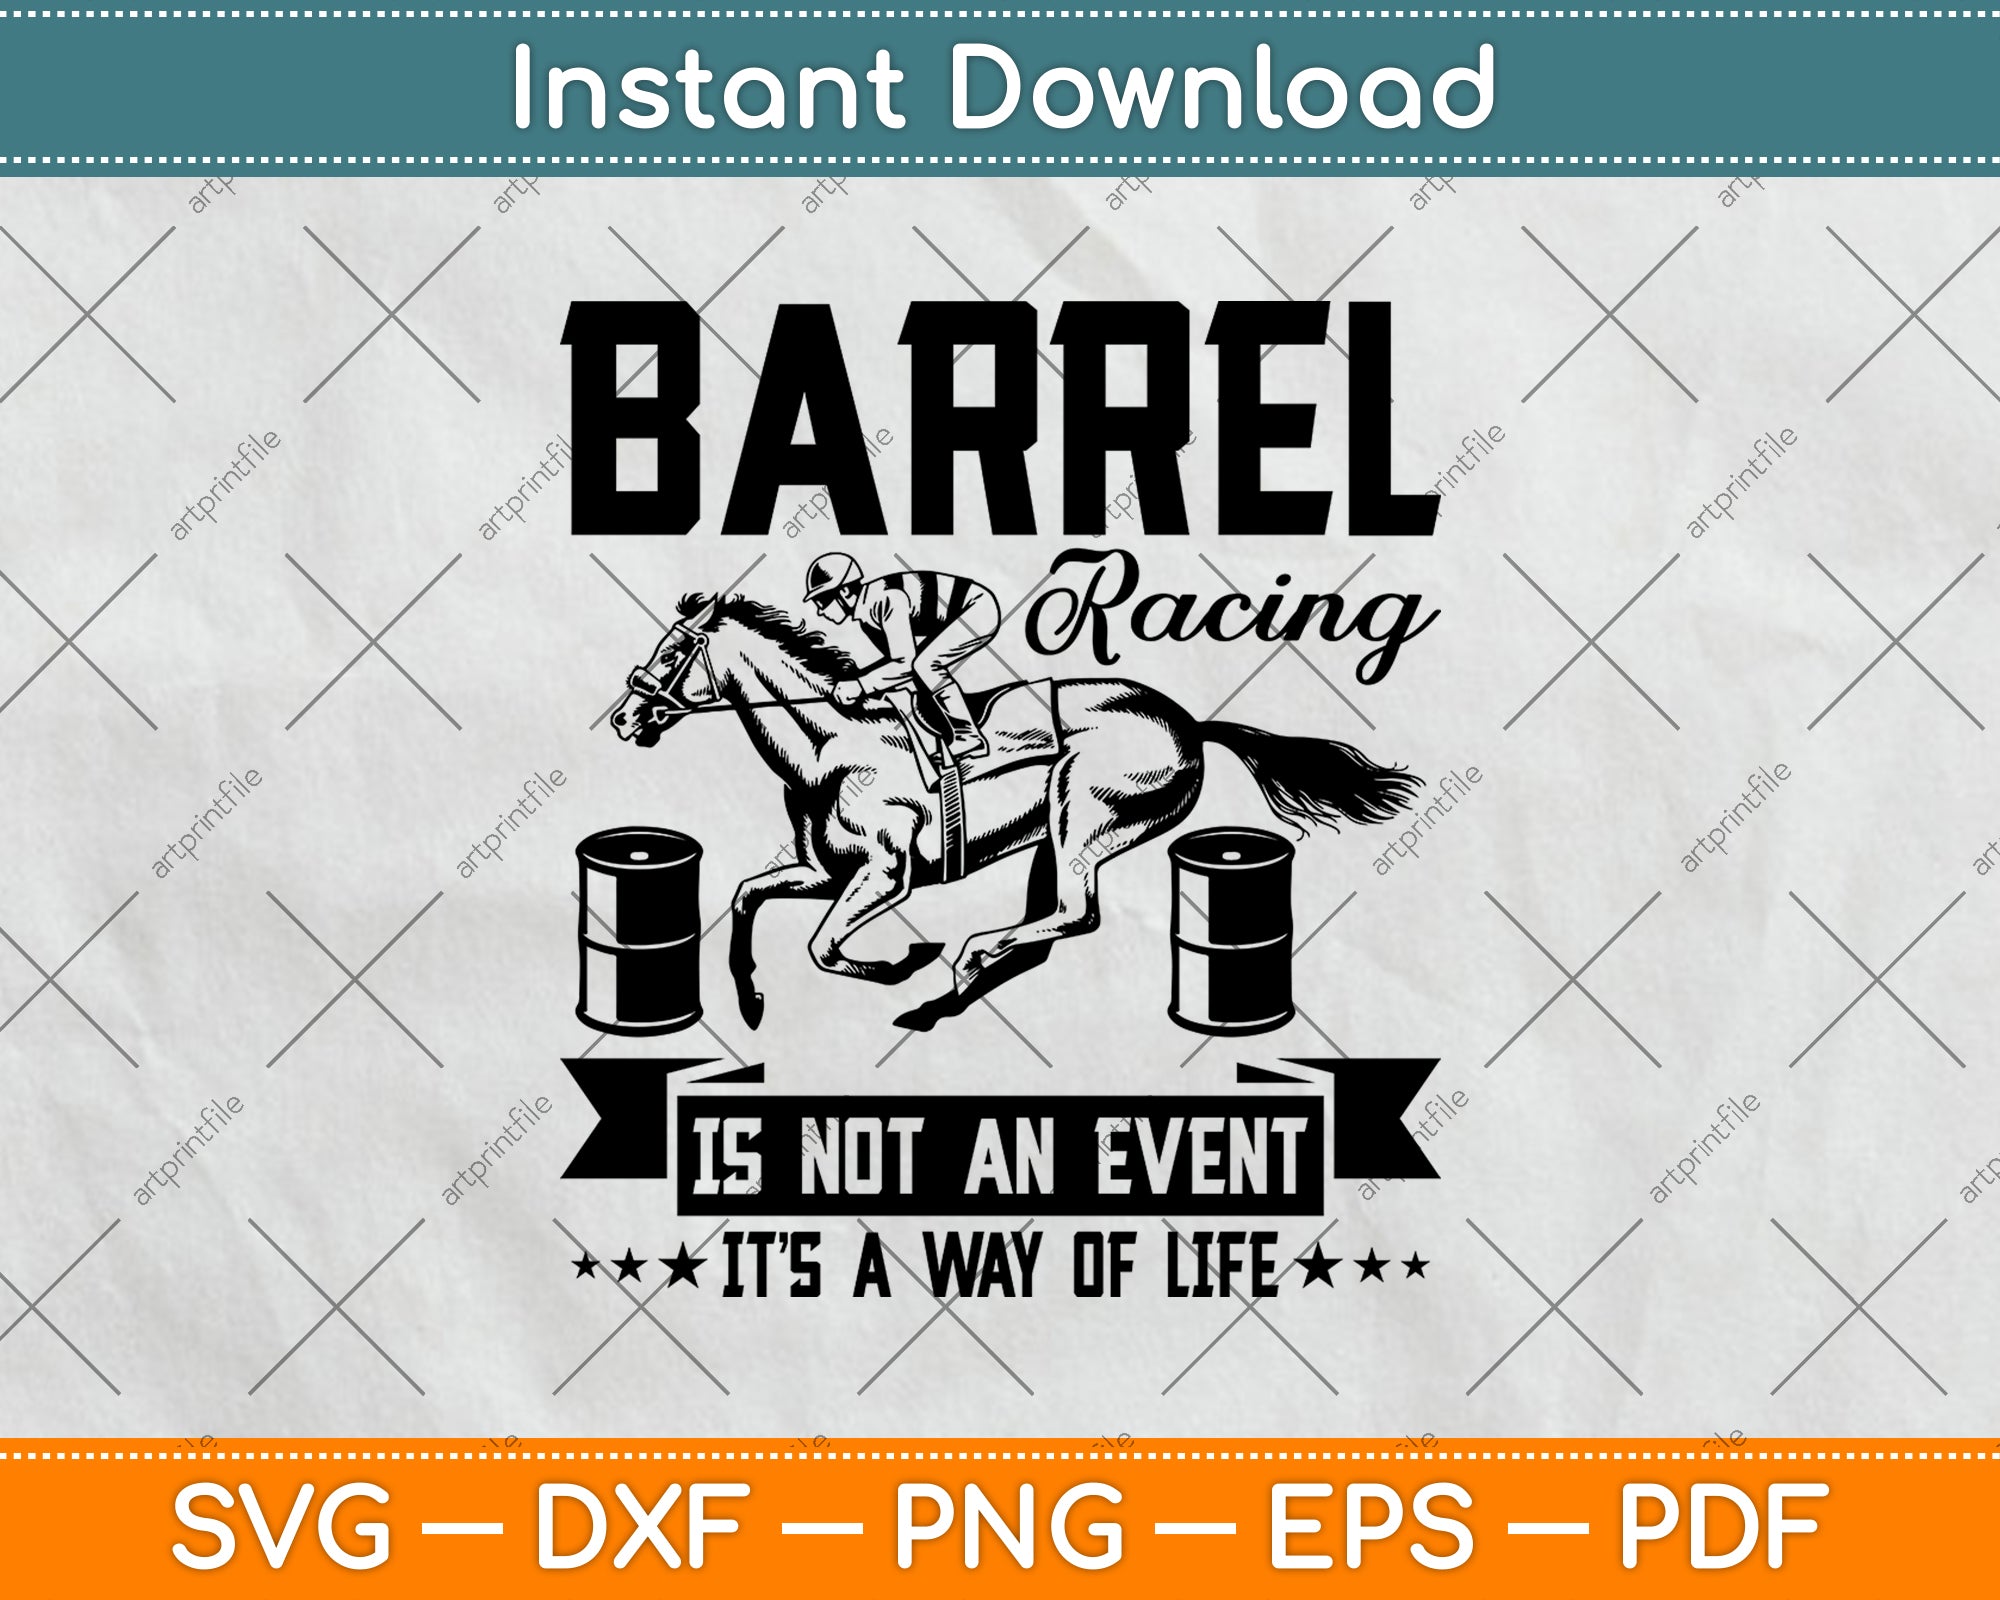 Do A Barrel Roll - Song Download from Keep Running @ JioSaavn